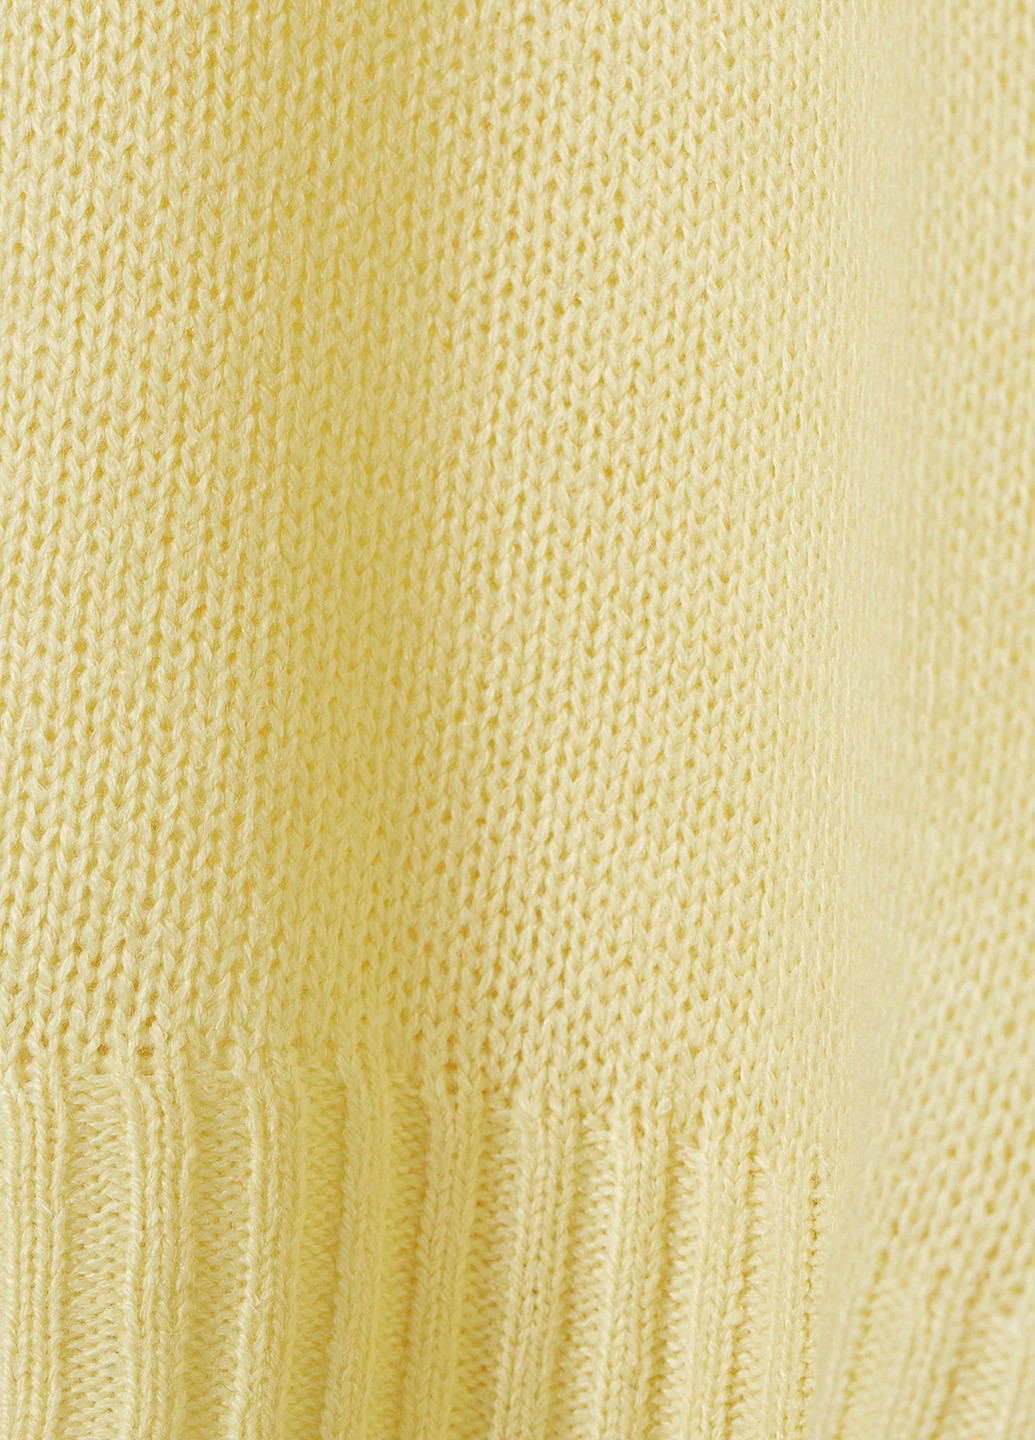 Светло-желтый демисезонный джемпер джемпер H&M